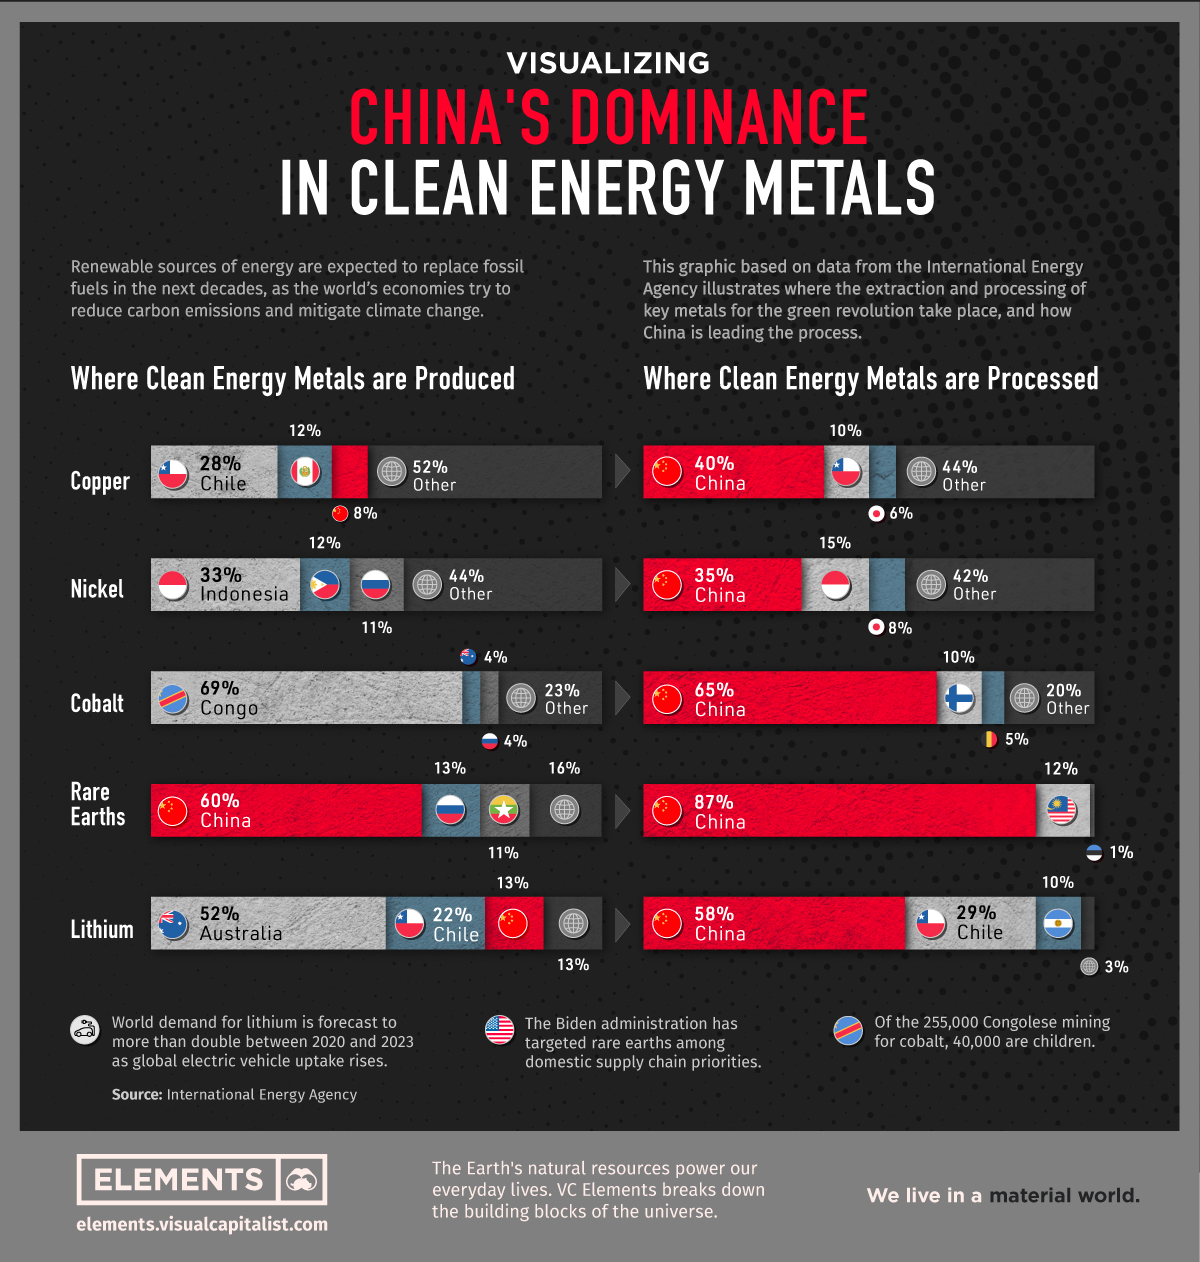 Visualizing-Chinas-Dominance-in-Clean-Energy-Metals-1.jpg